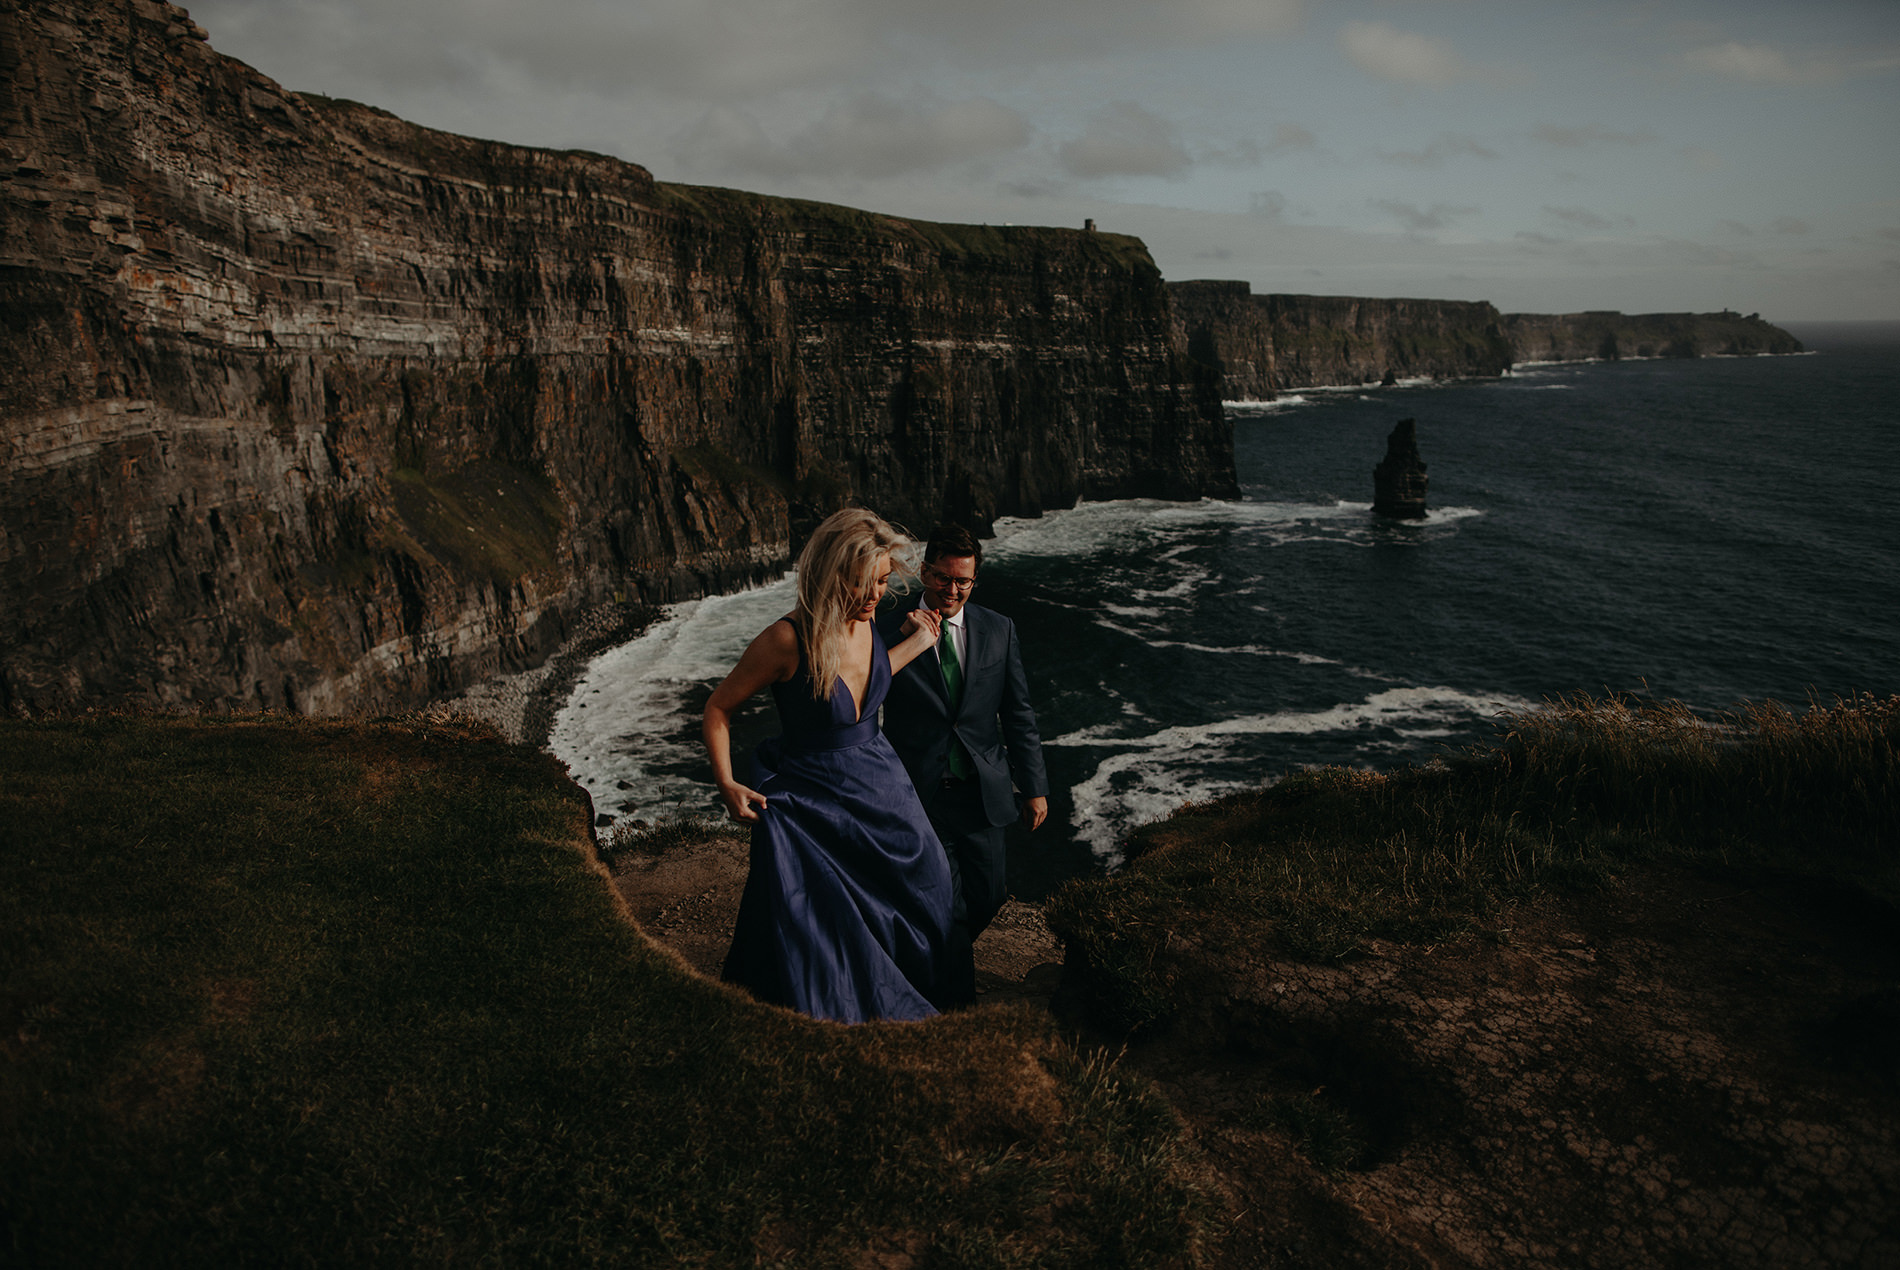 Romance at the Cliffs